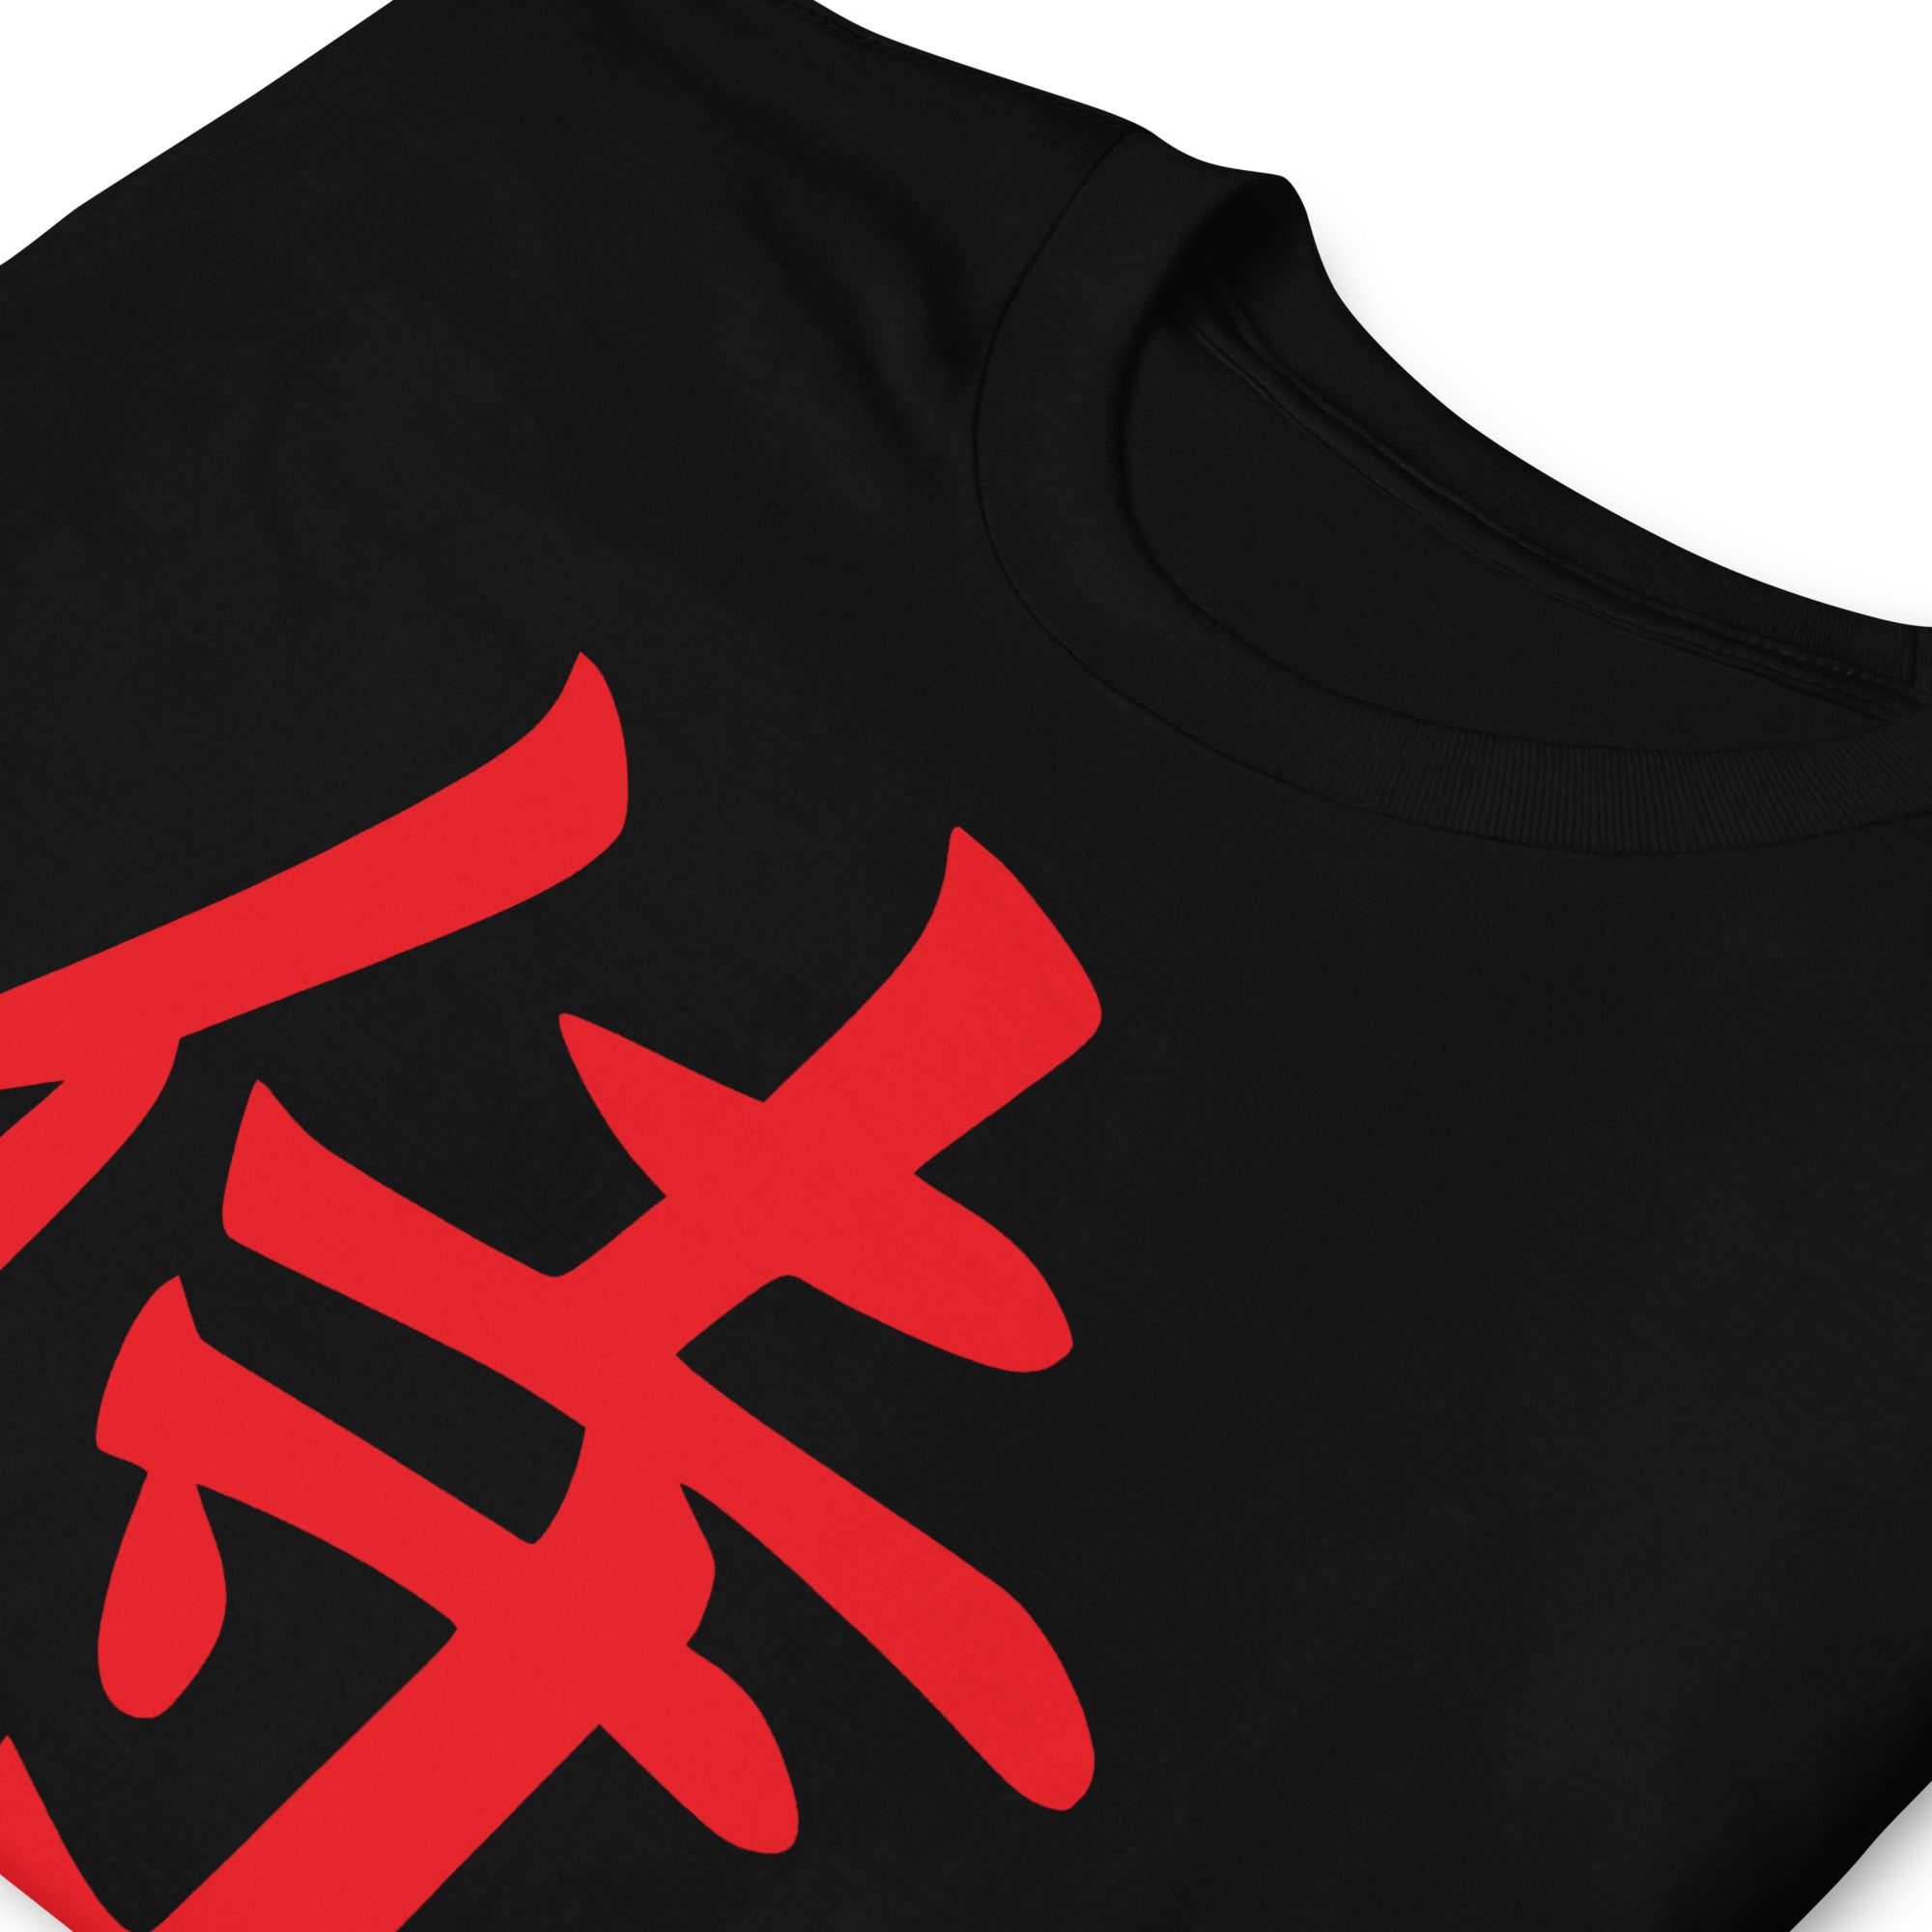 Red Samurai The Japanese Kanji Symbol Men's Short-Sleeve T-Shirt - Edge of Life Designs